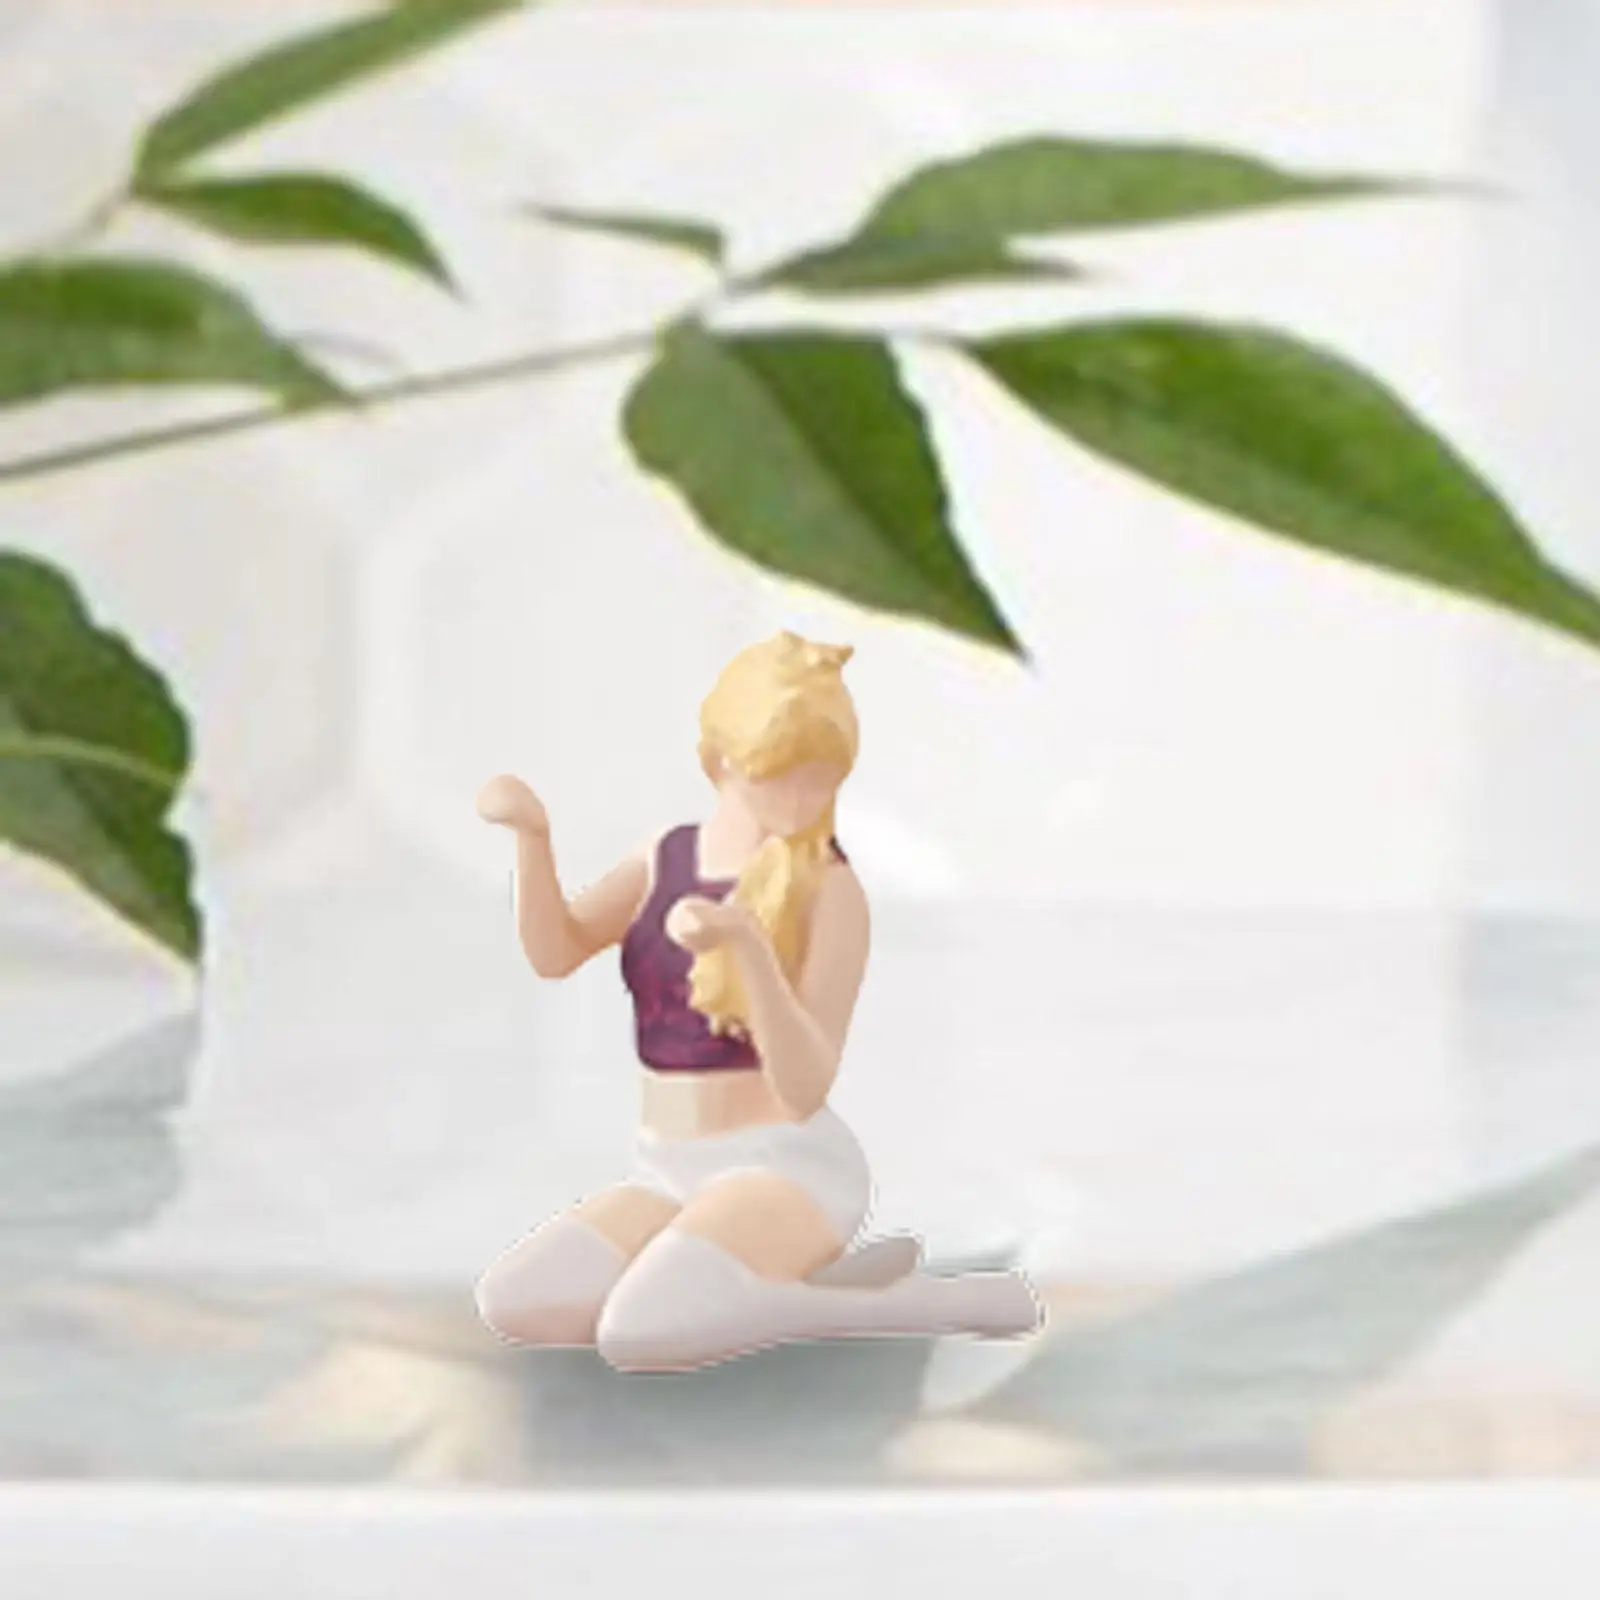 1:64 Scale Servant Girl Figure Housemaid Doll Figurine Character for Micro Landscape Architecture Model Miniature Scene S Scale